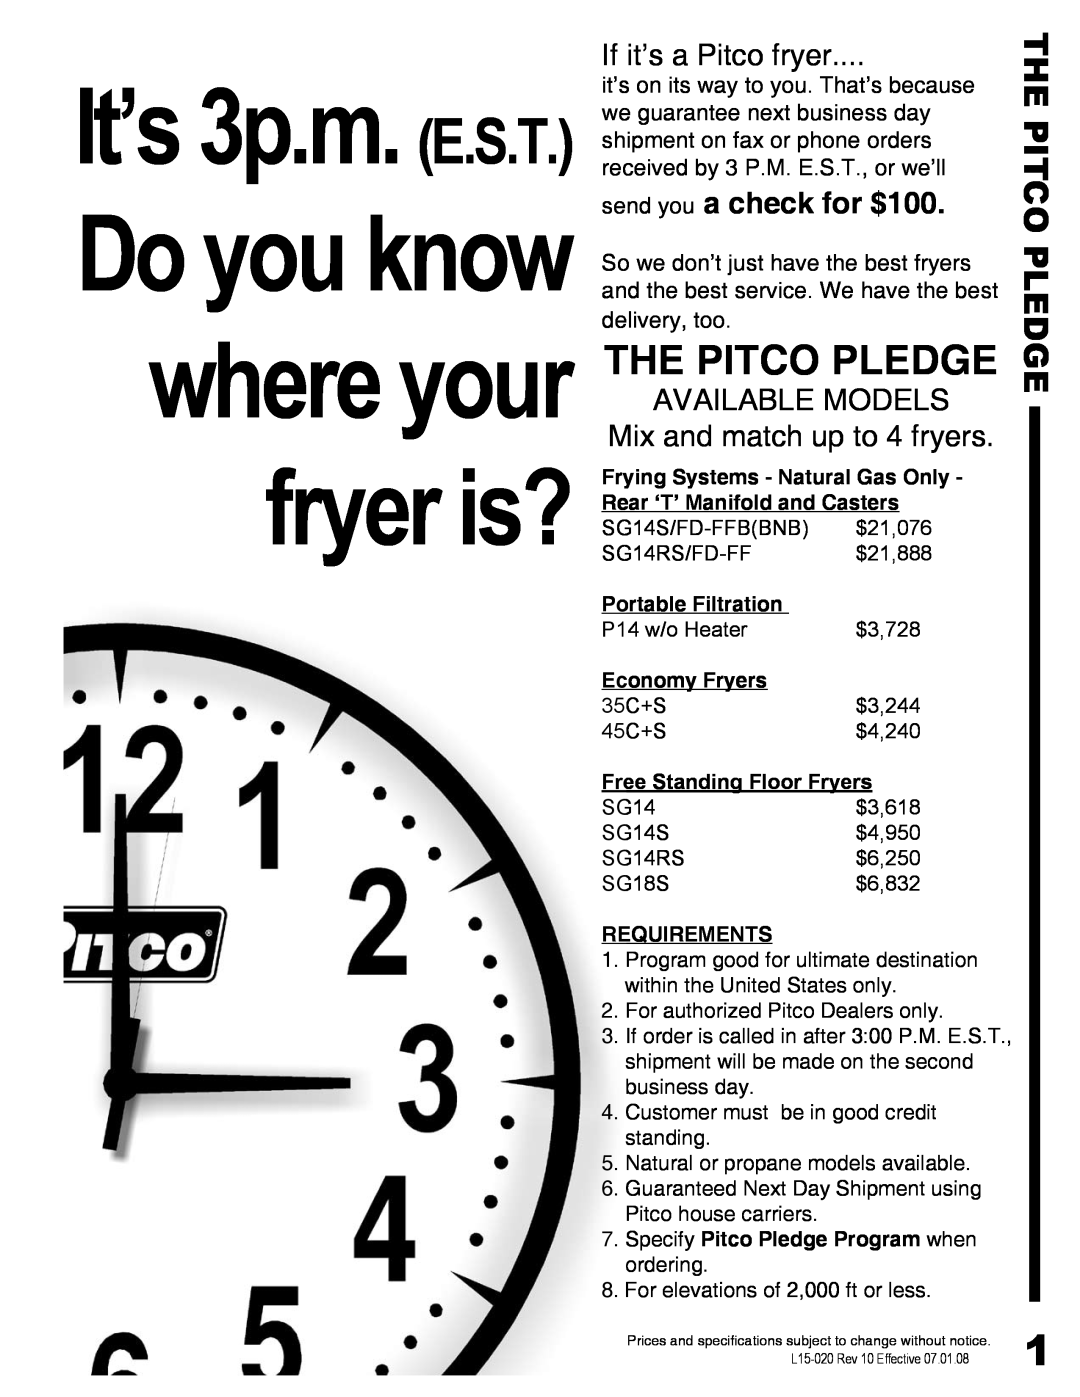 Pitco Frialator SG14DI manual The Pitco Pledge, It’s 3p.m. E.S.T. Do you know where your fryer is?, If it’s a Pitco fryer 